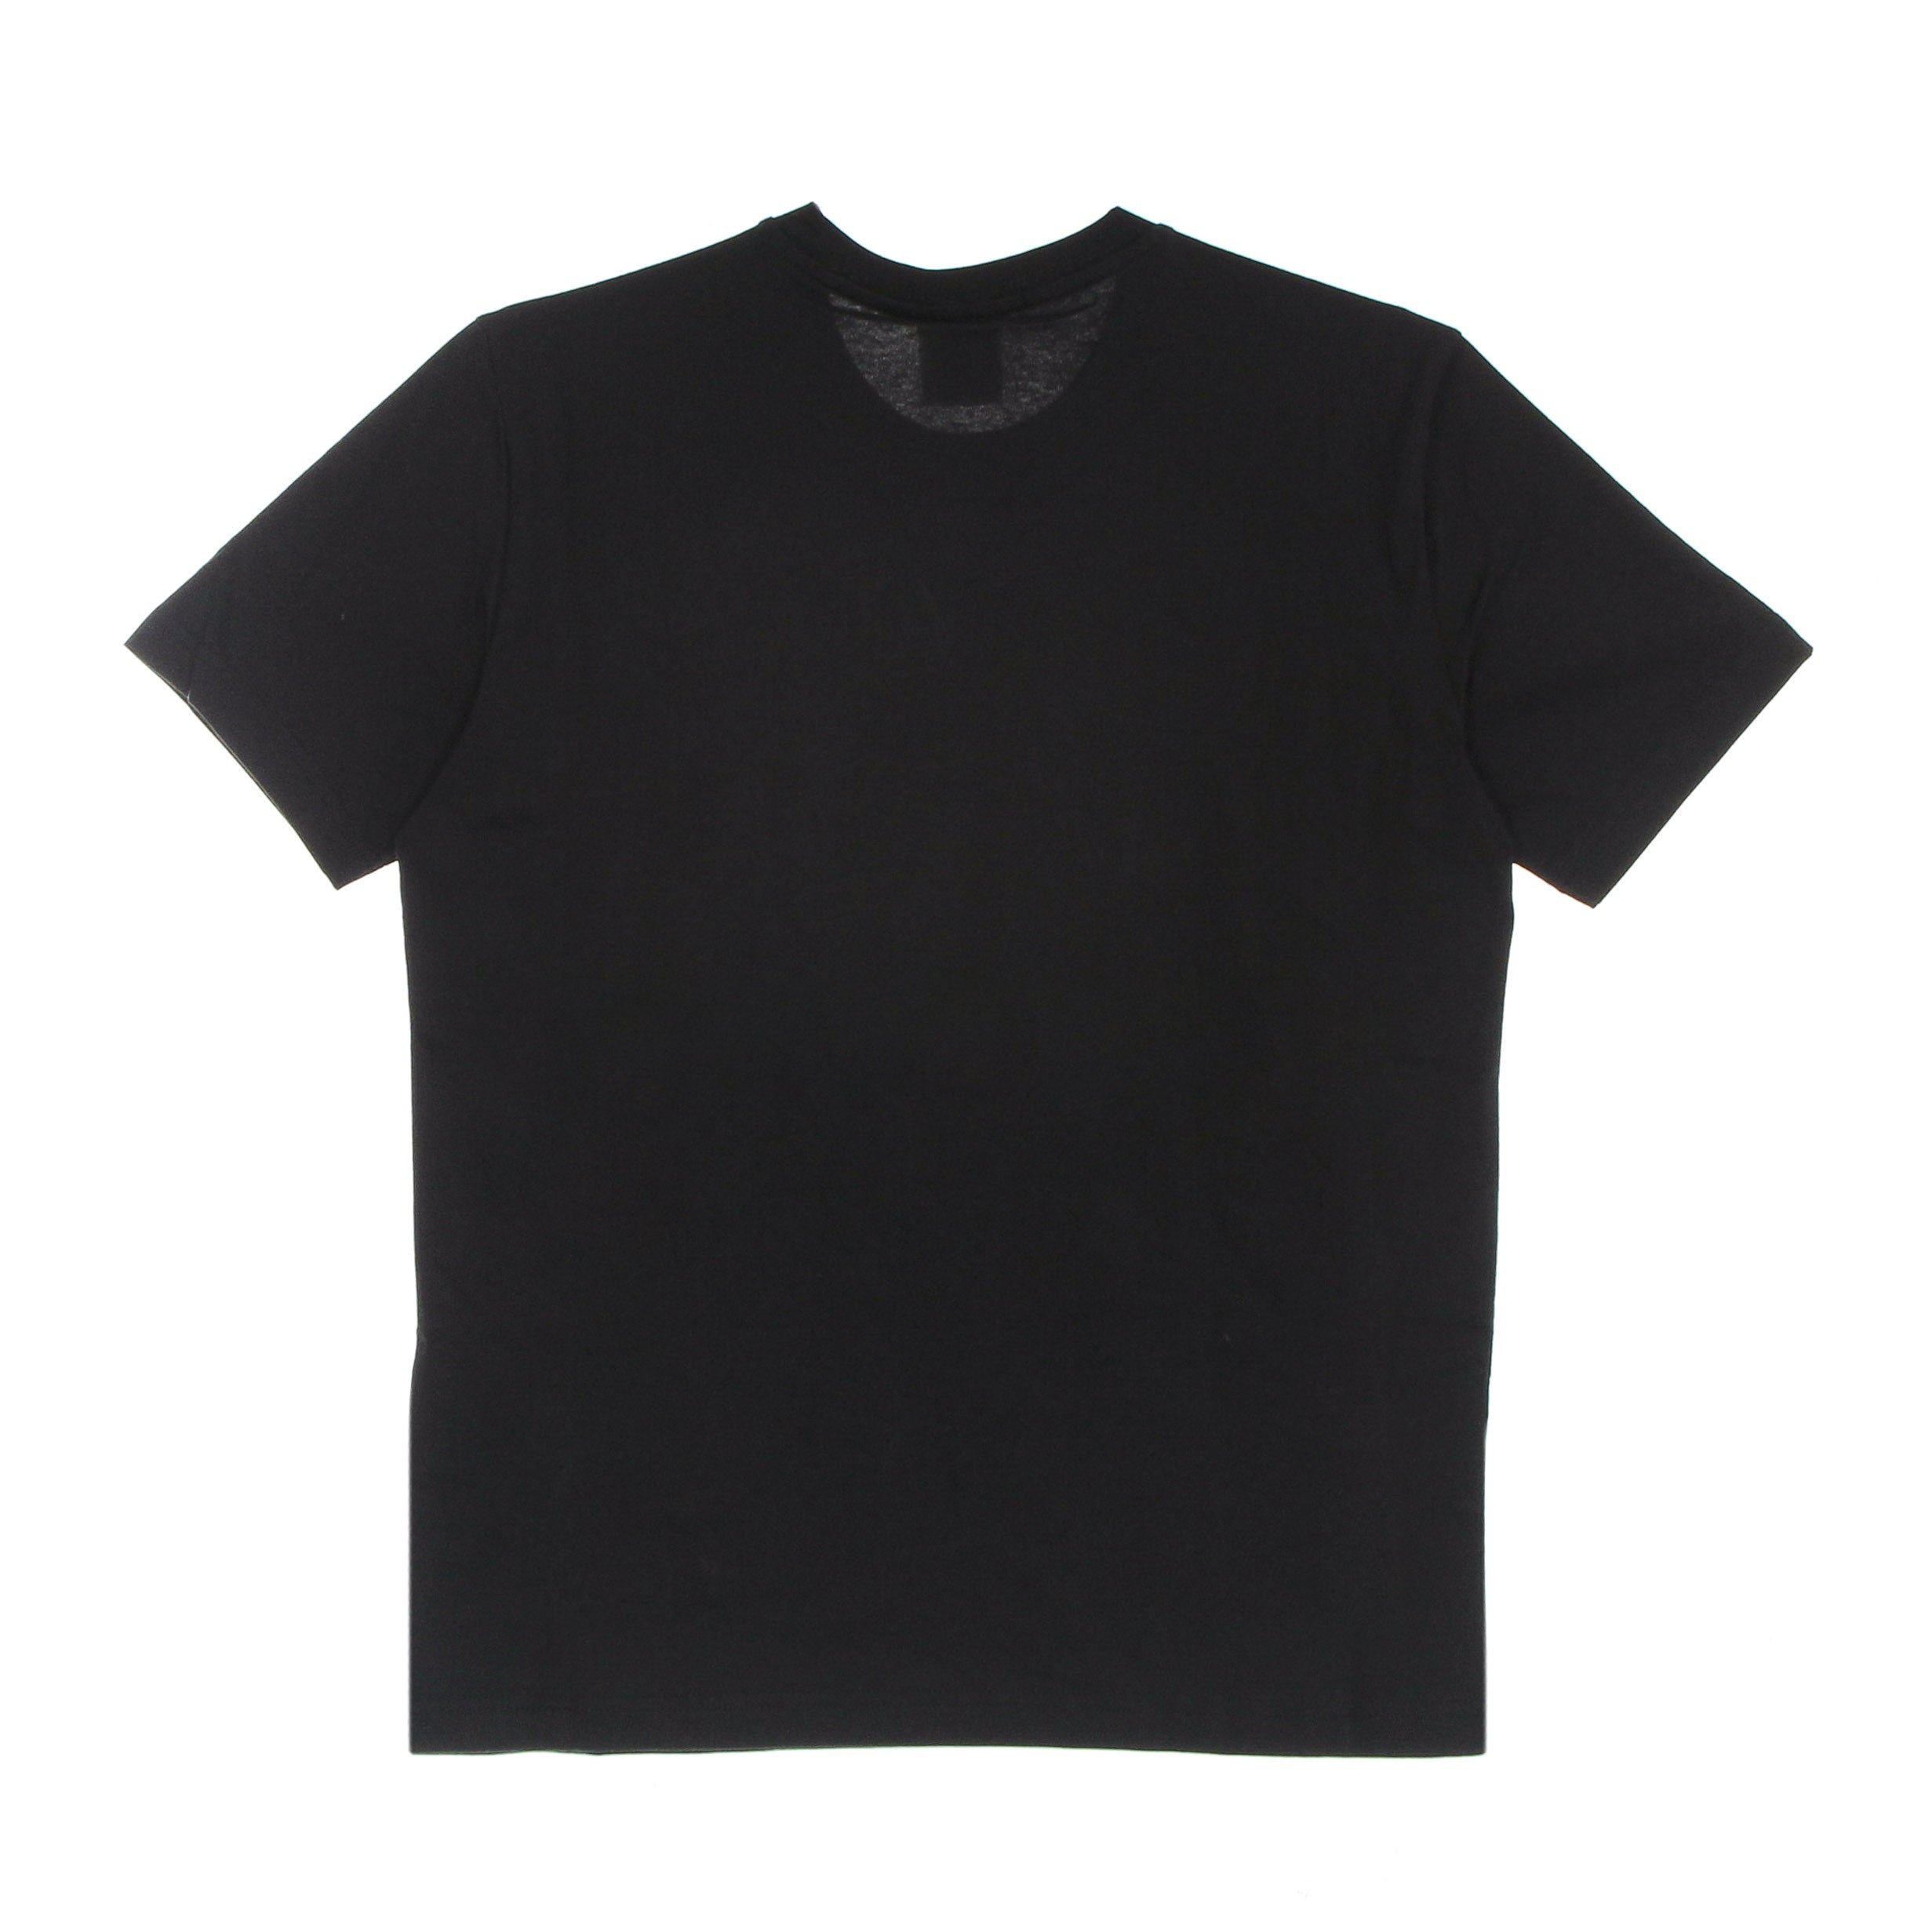 Ncaa Tee Harcri Black Men's T-Shirt